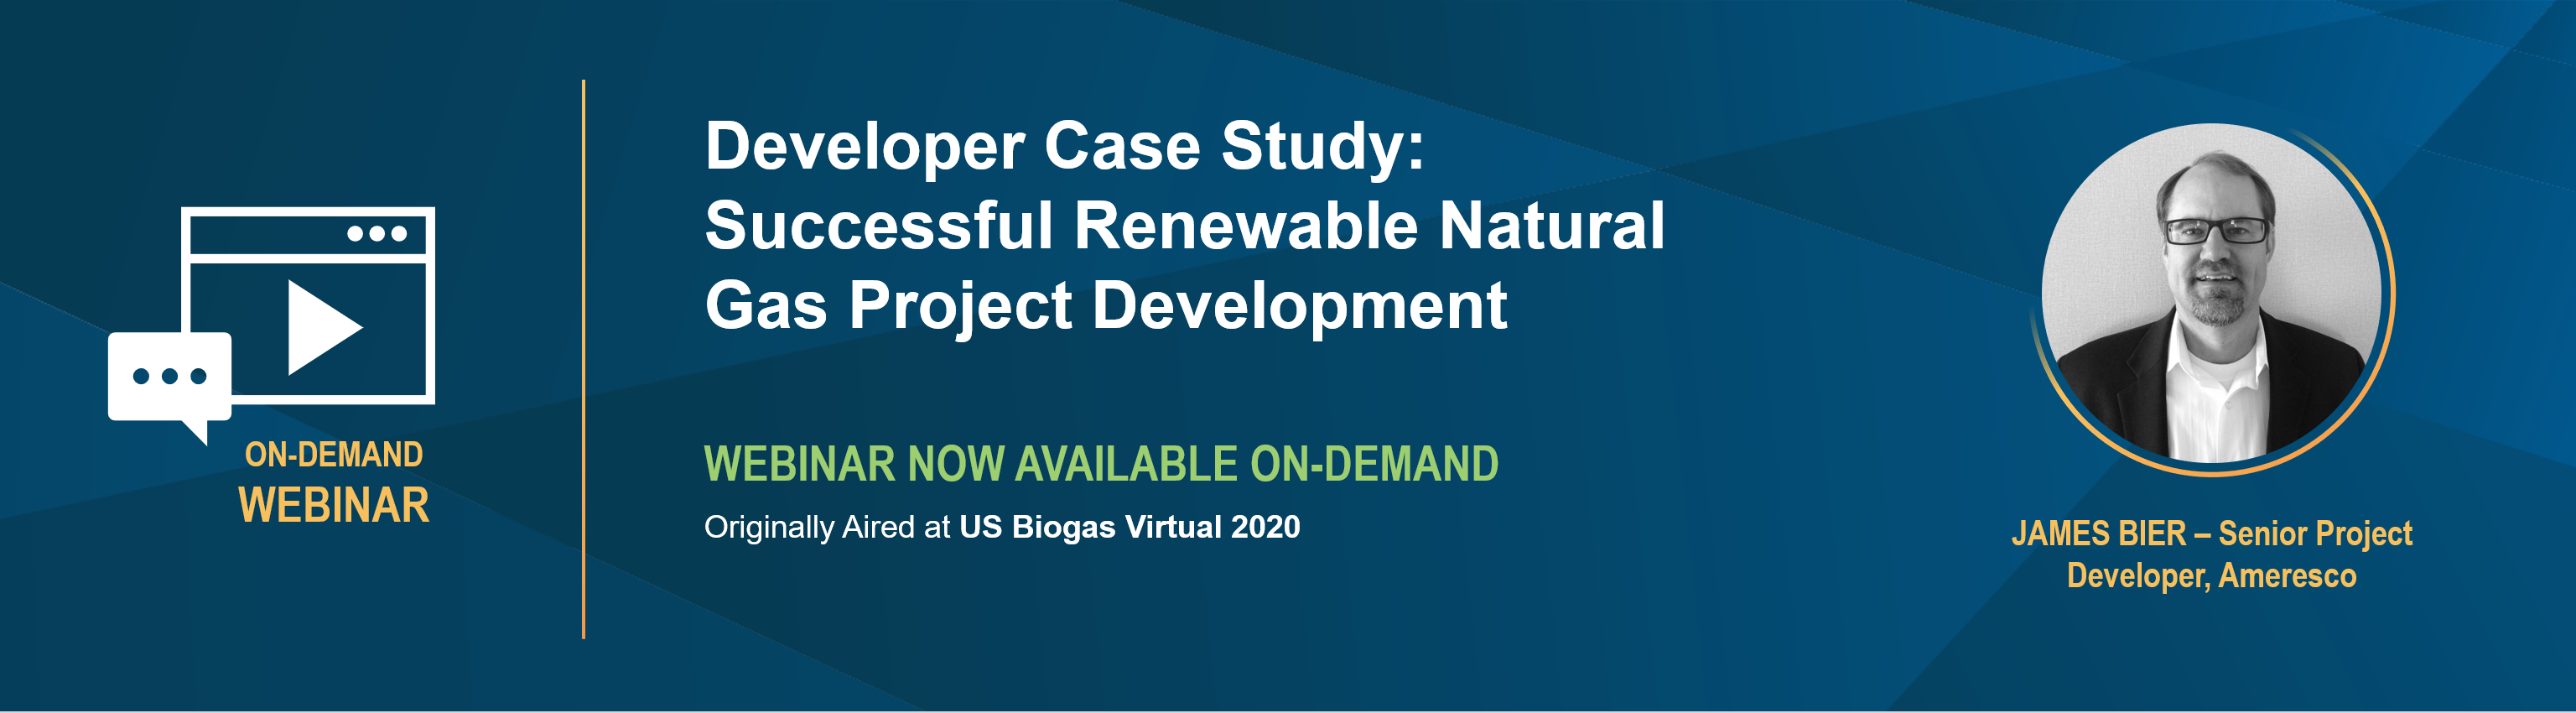 LP US Biogas Virtual 2020 Image